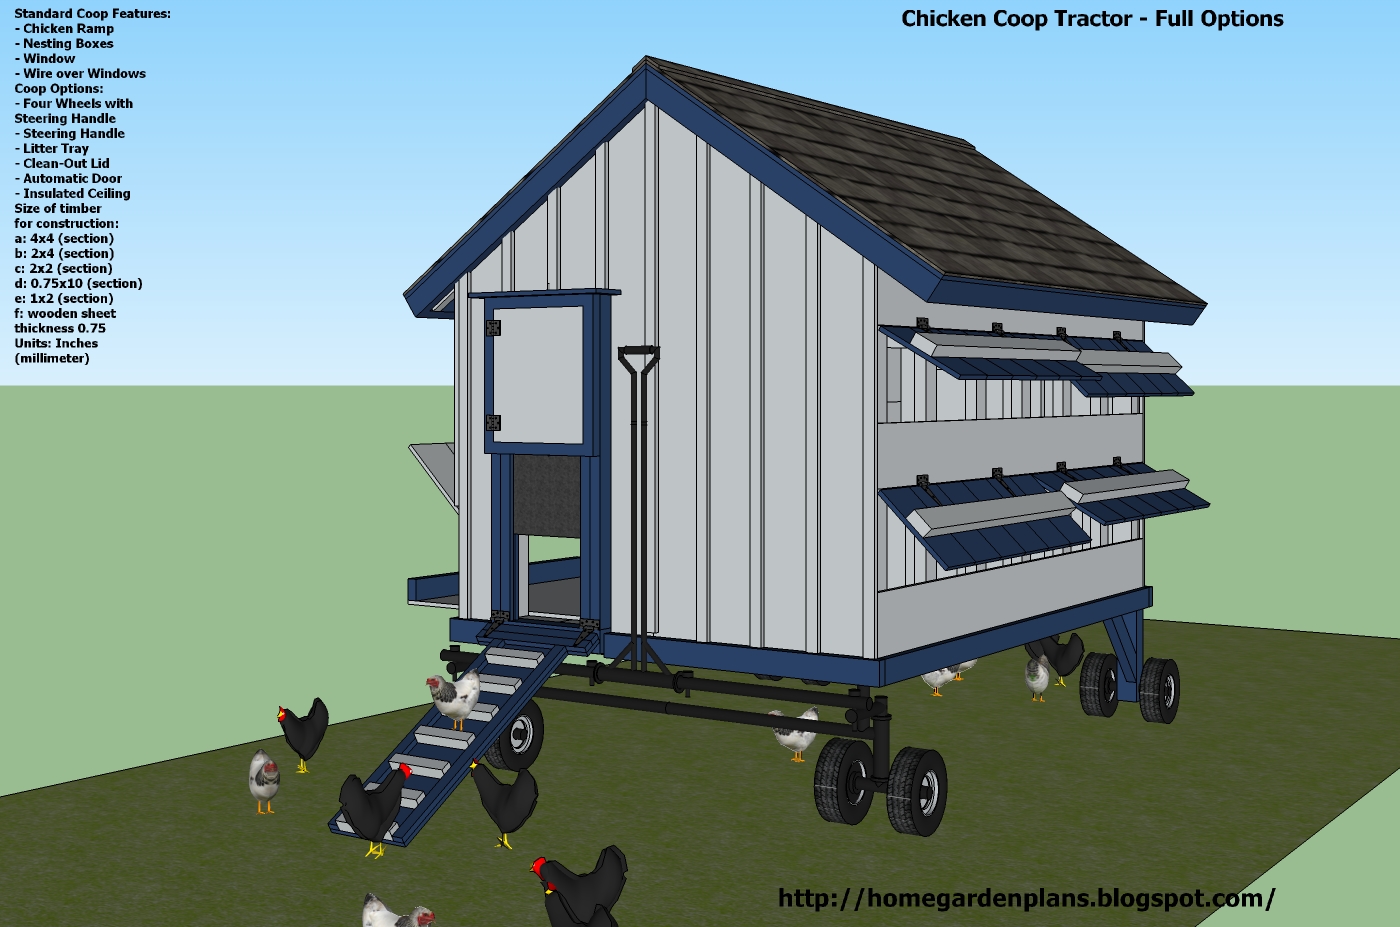 Portable Chicken Coop Plans On Wheels Chicken coop tractor plans